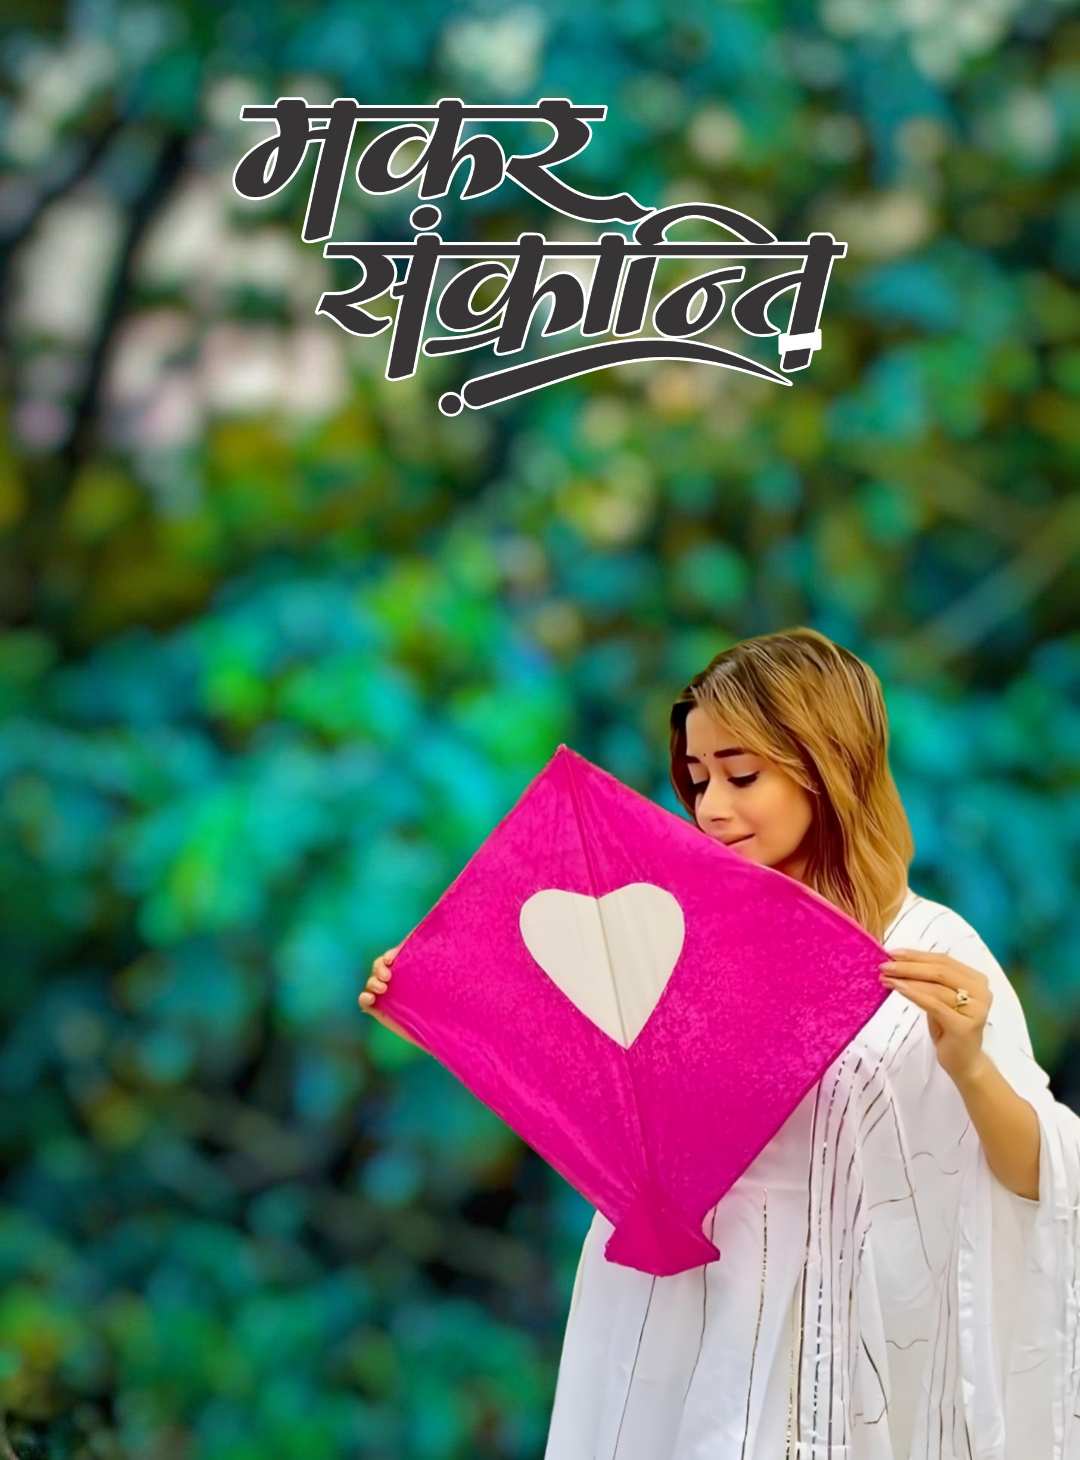 Makar Sankranti CB Editing Background HD Free With Cute Girl